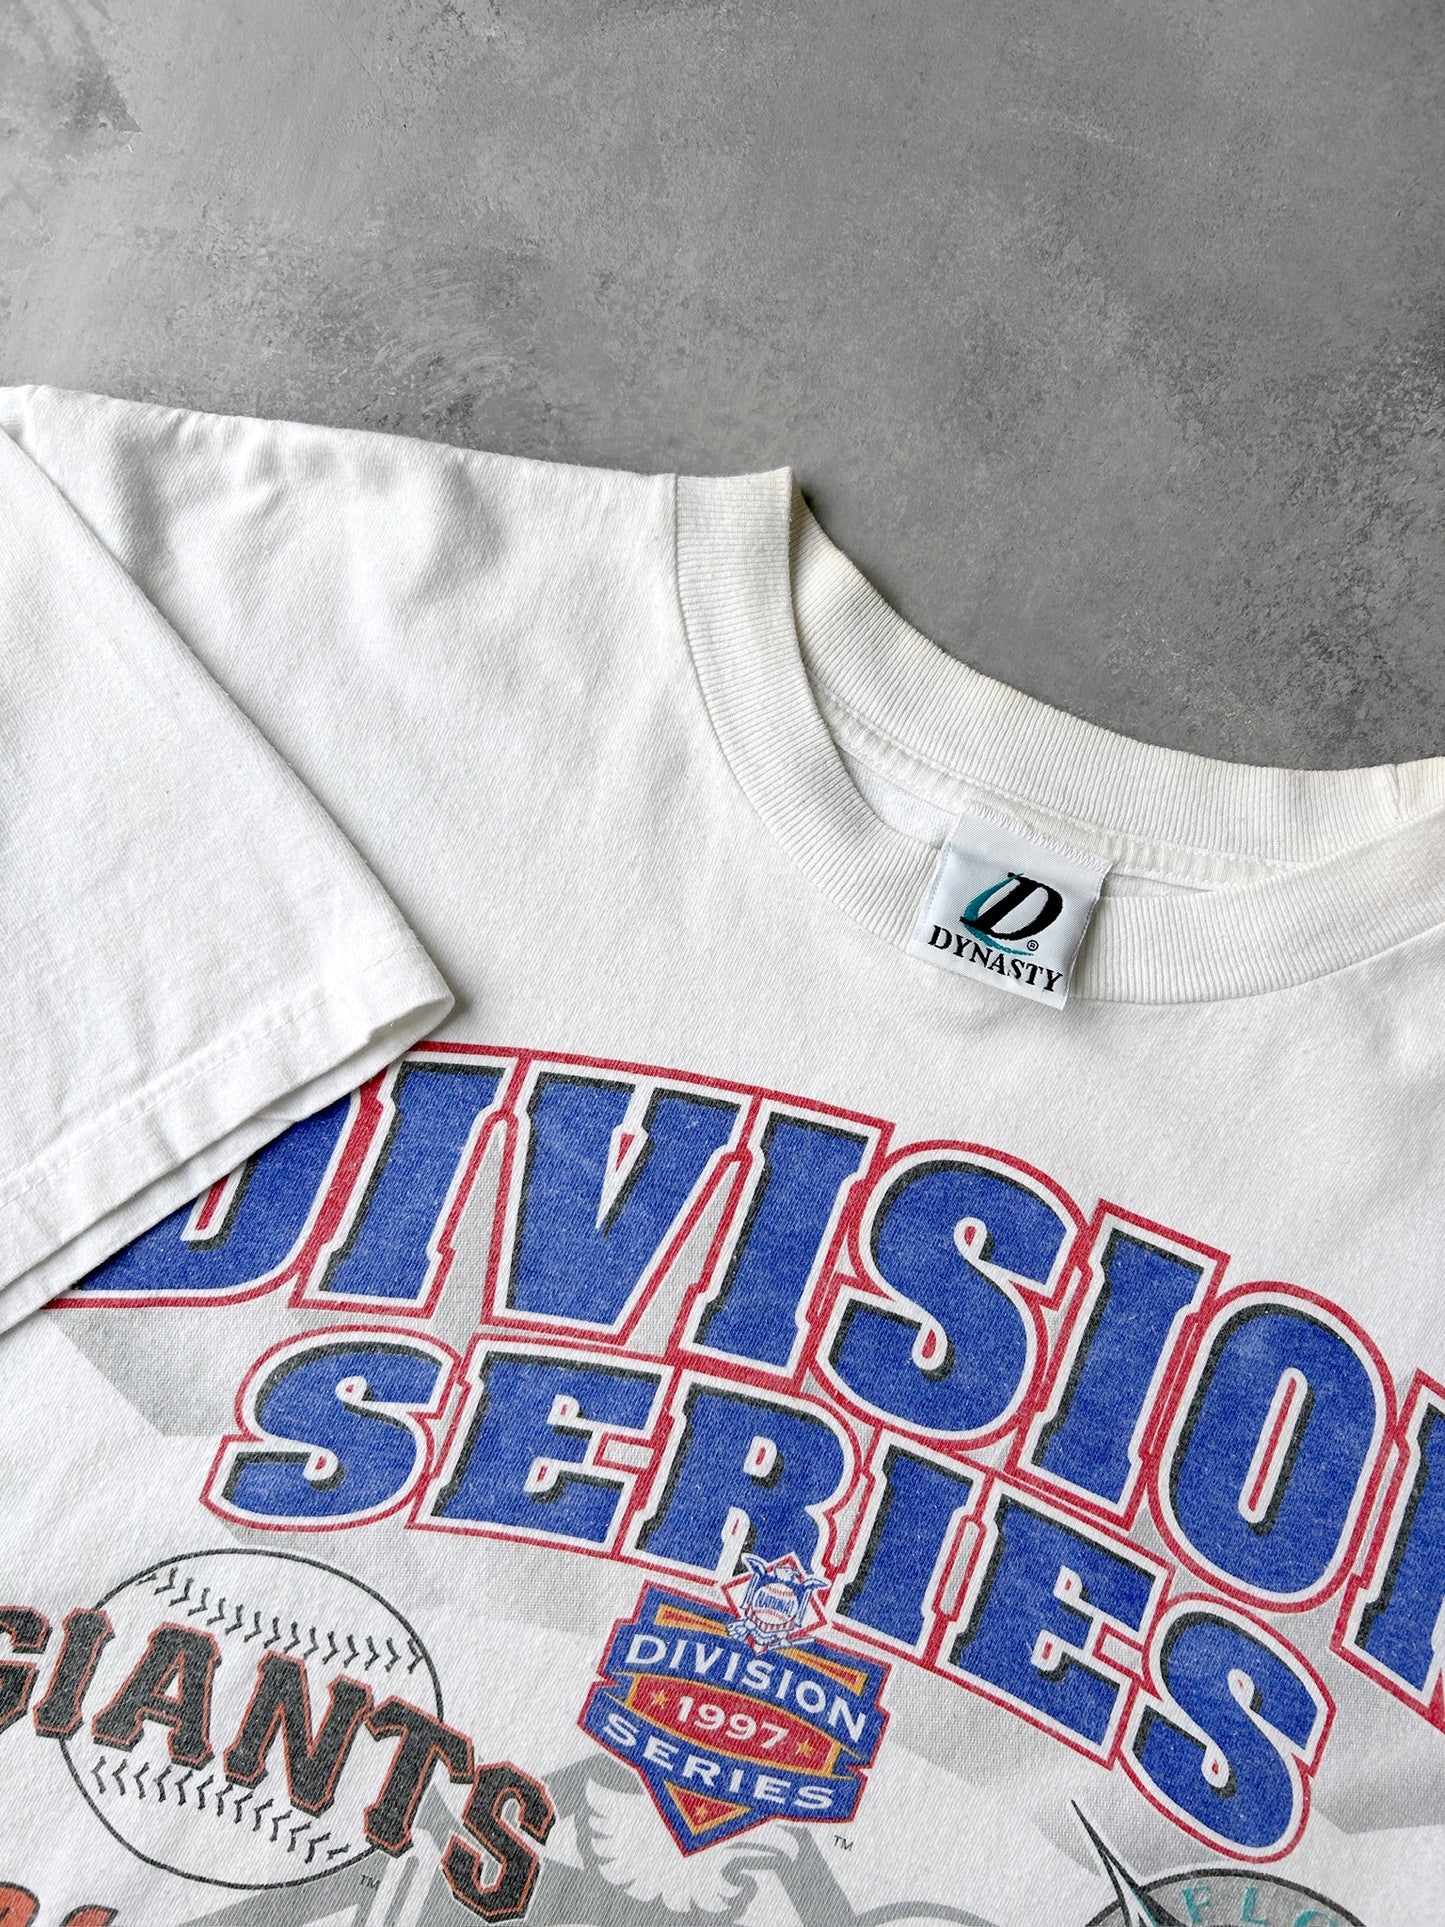 National League Division Matchup T-Shirt '97 - XL